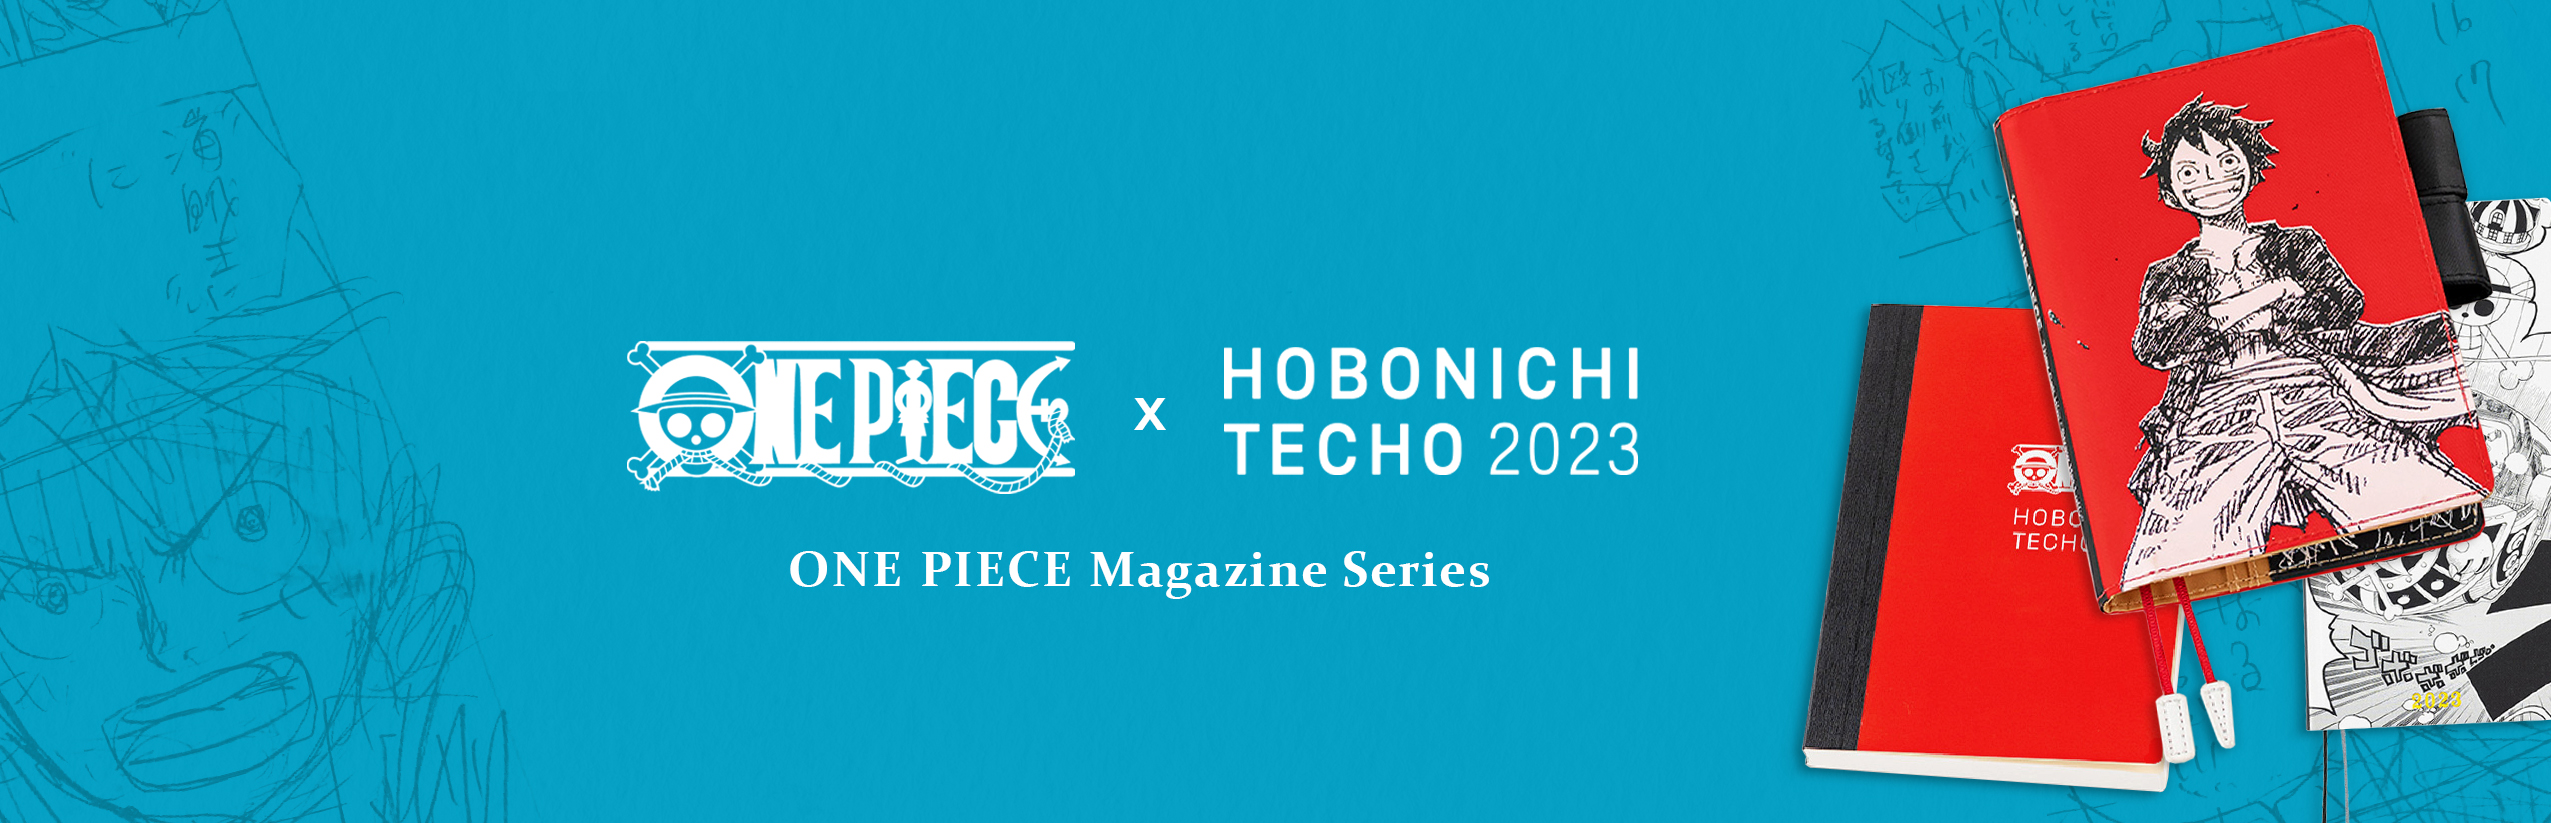 Hobonichi / One Piece